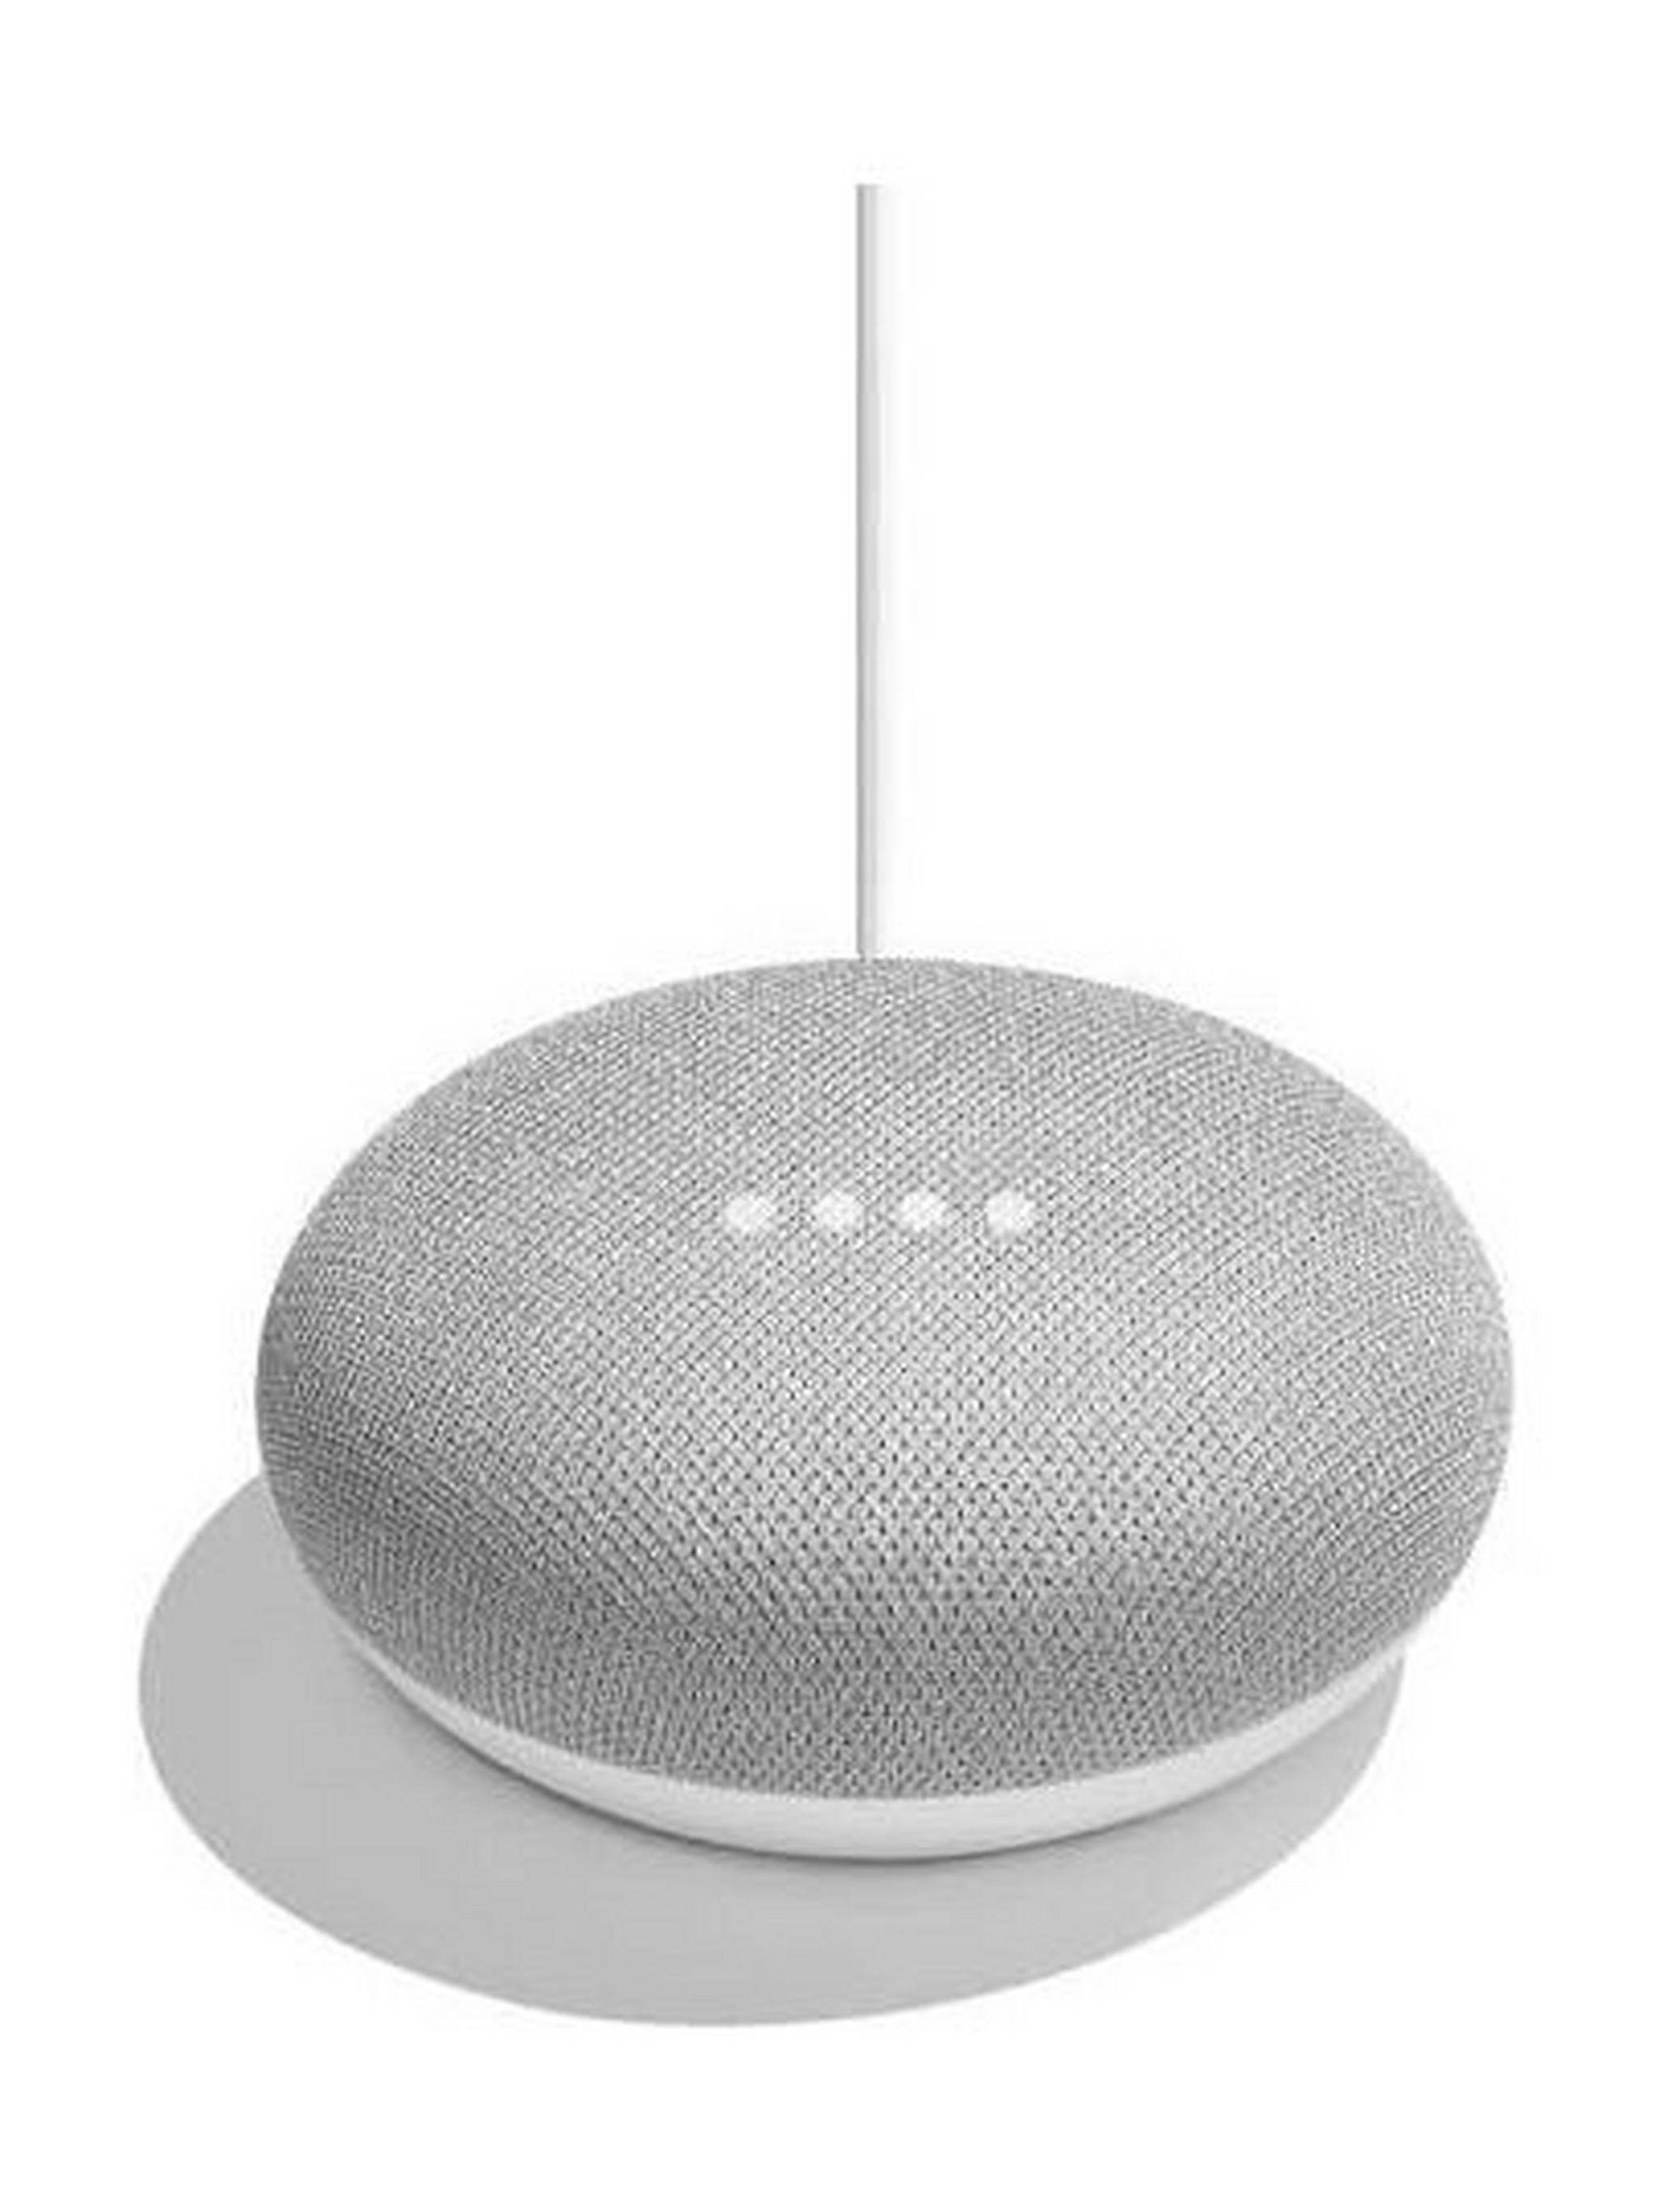 Google Home Mini Personal Assistant